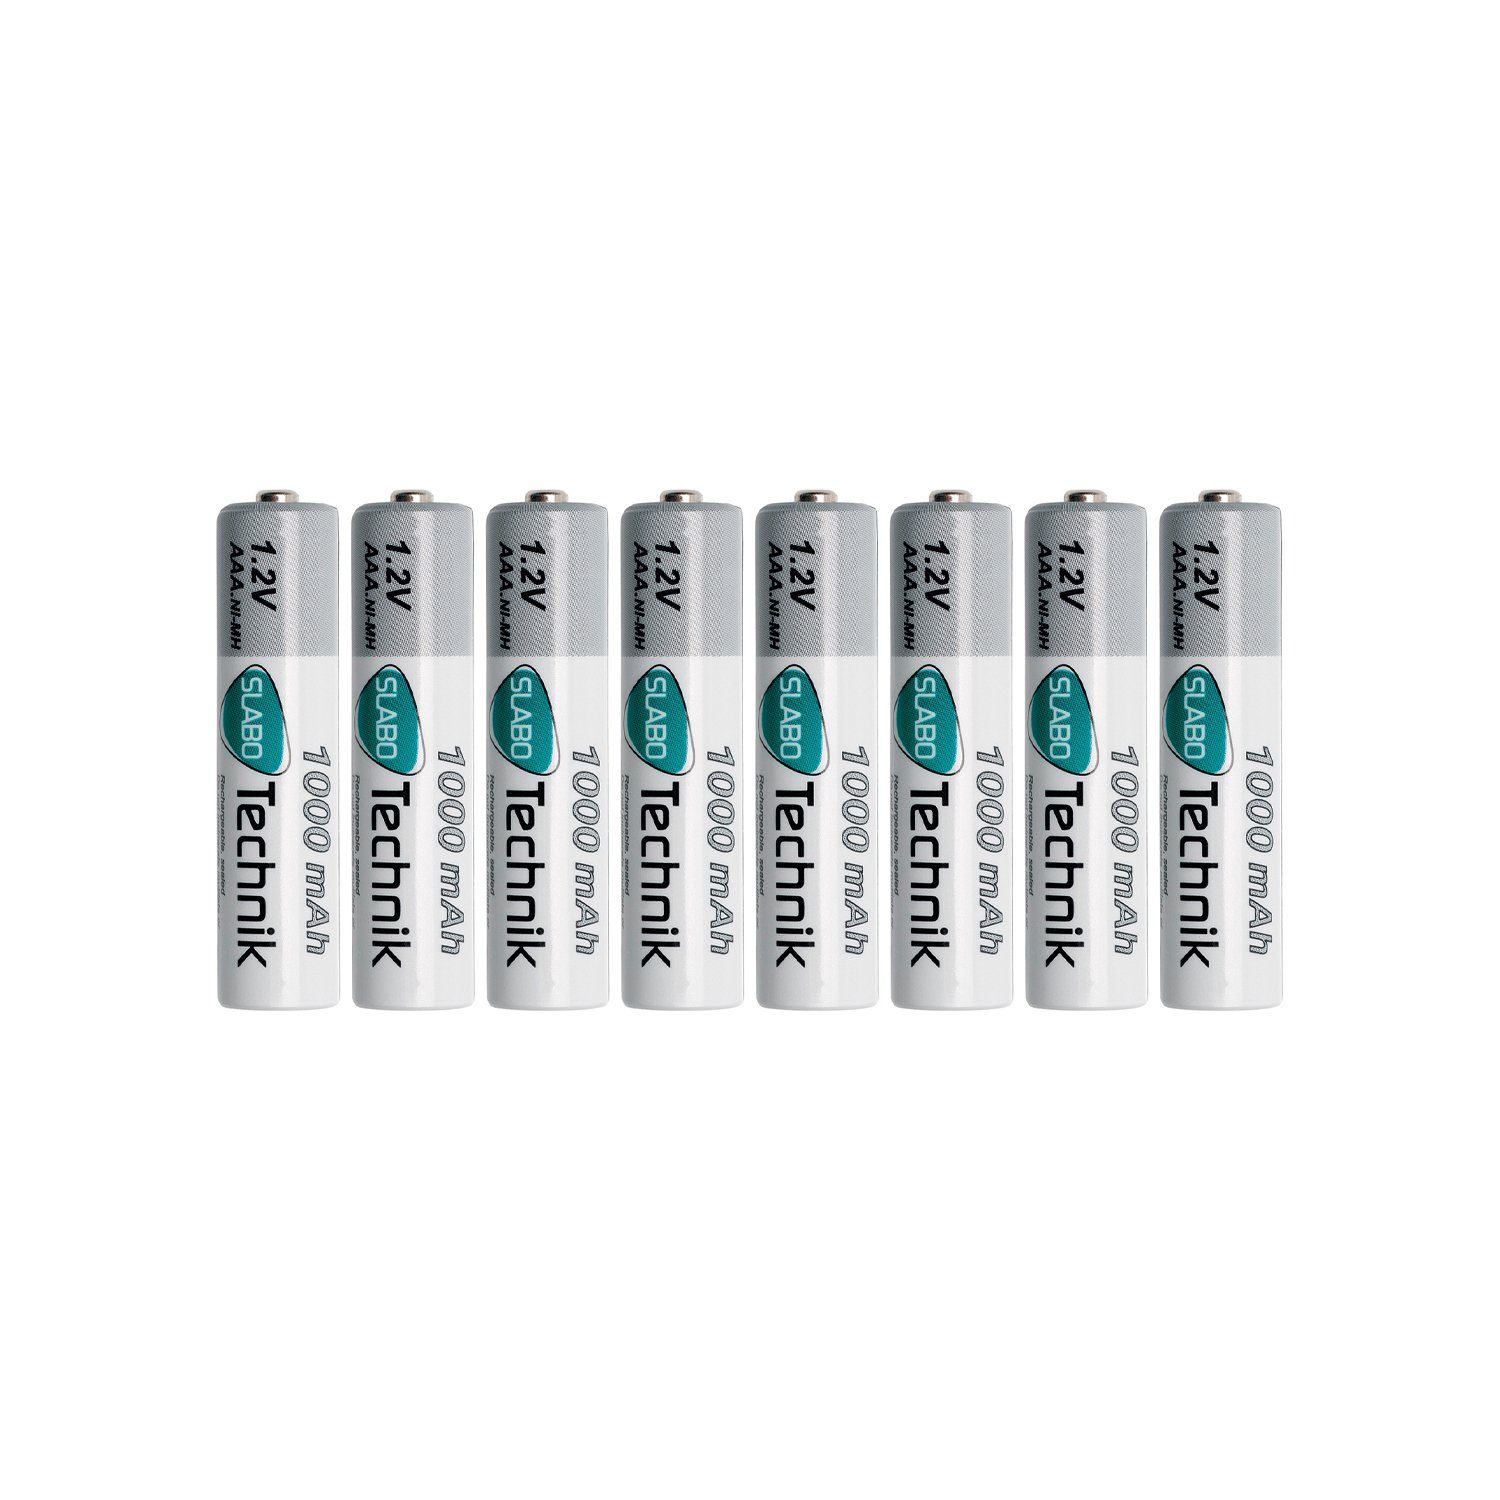 SLABO »Ni-MH Akku AAA Micro Batterien wiederaufladbar rechargeable Batterie  HR03 Nickel-Metallhydrid 1000mAh/1.2V - 8er-Pack« Akku online kaufen | OTTO